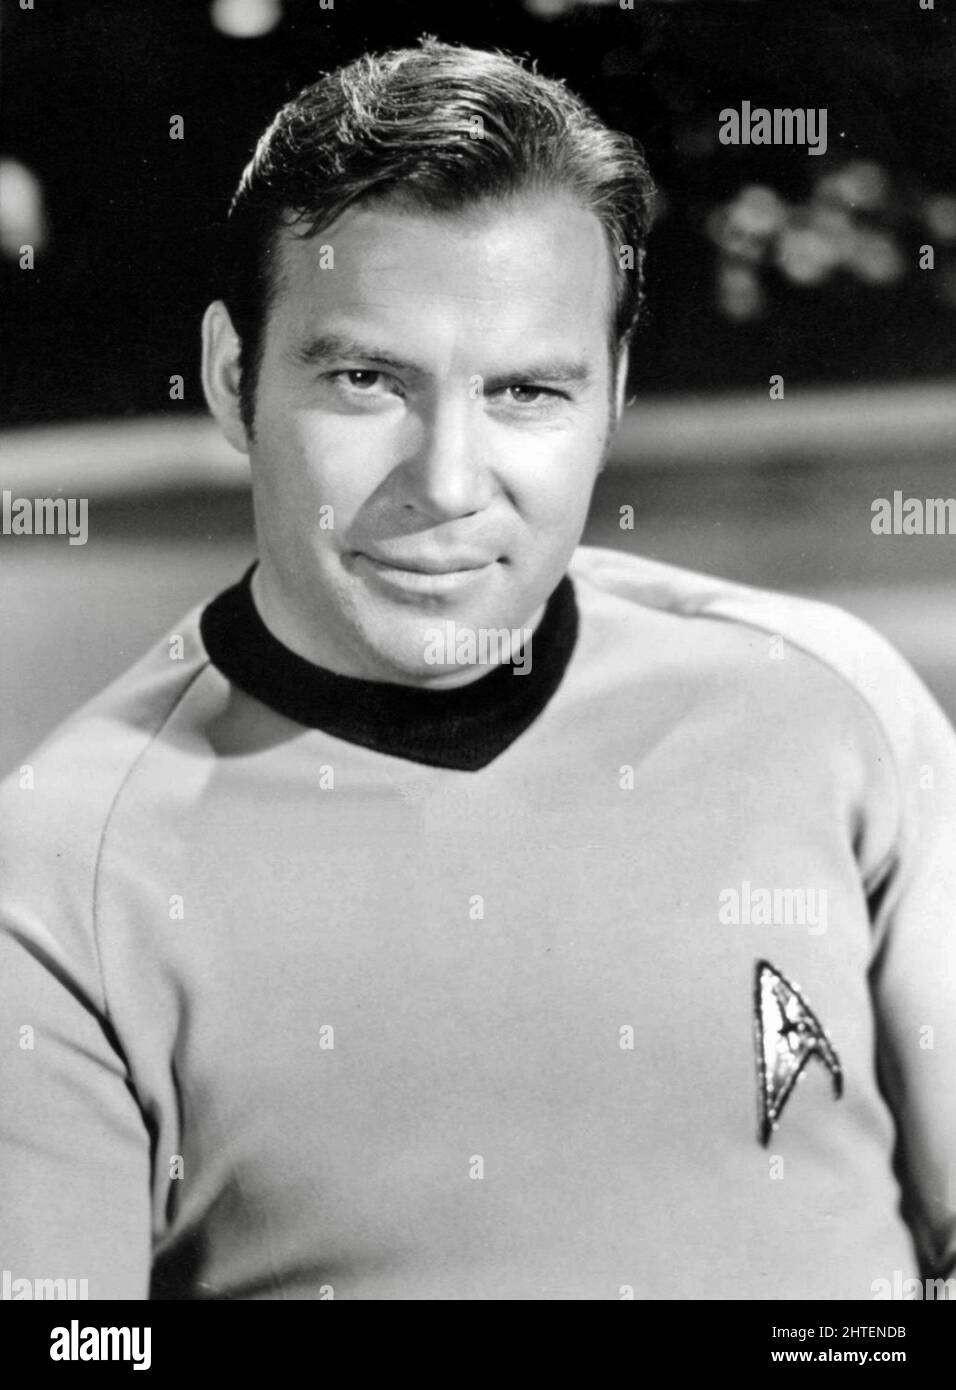 William Shatner as James Kirk from the television program Star Trek. Stock Photo